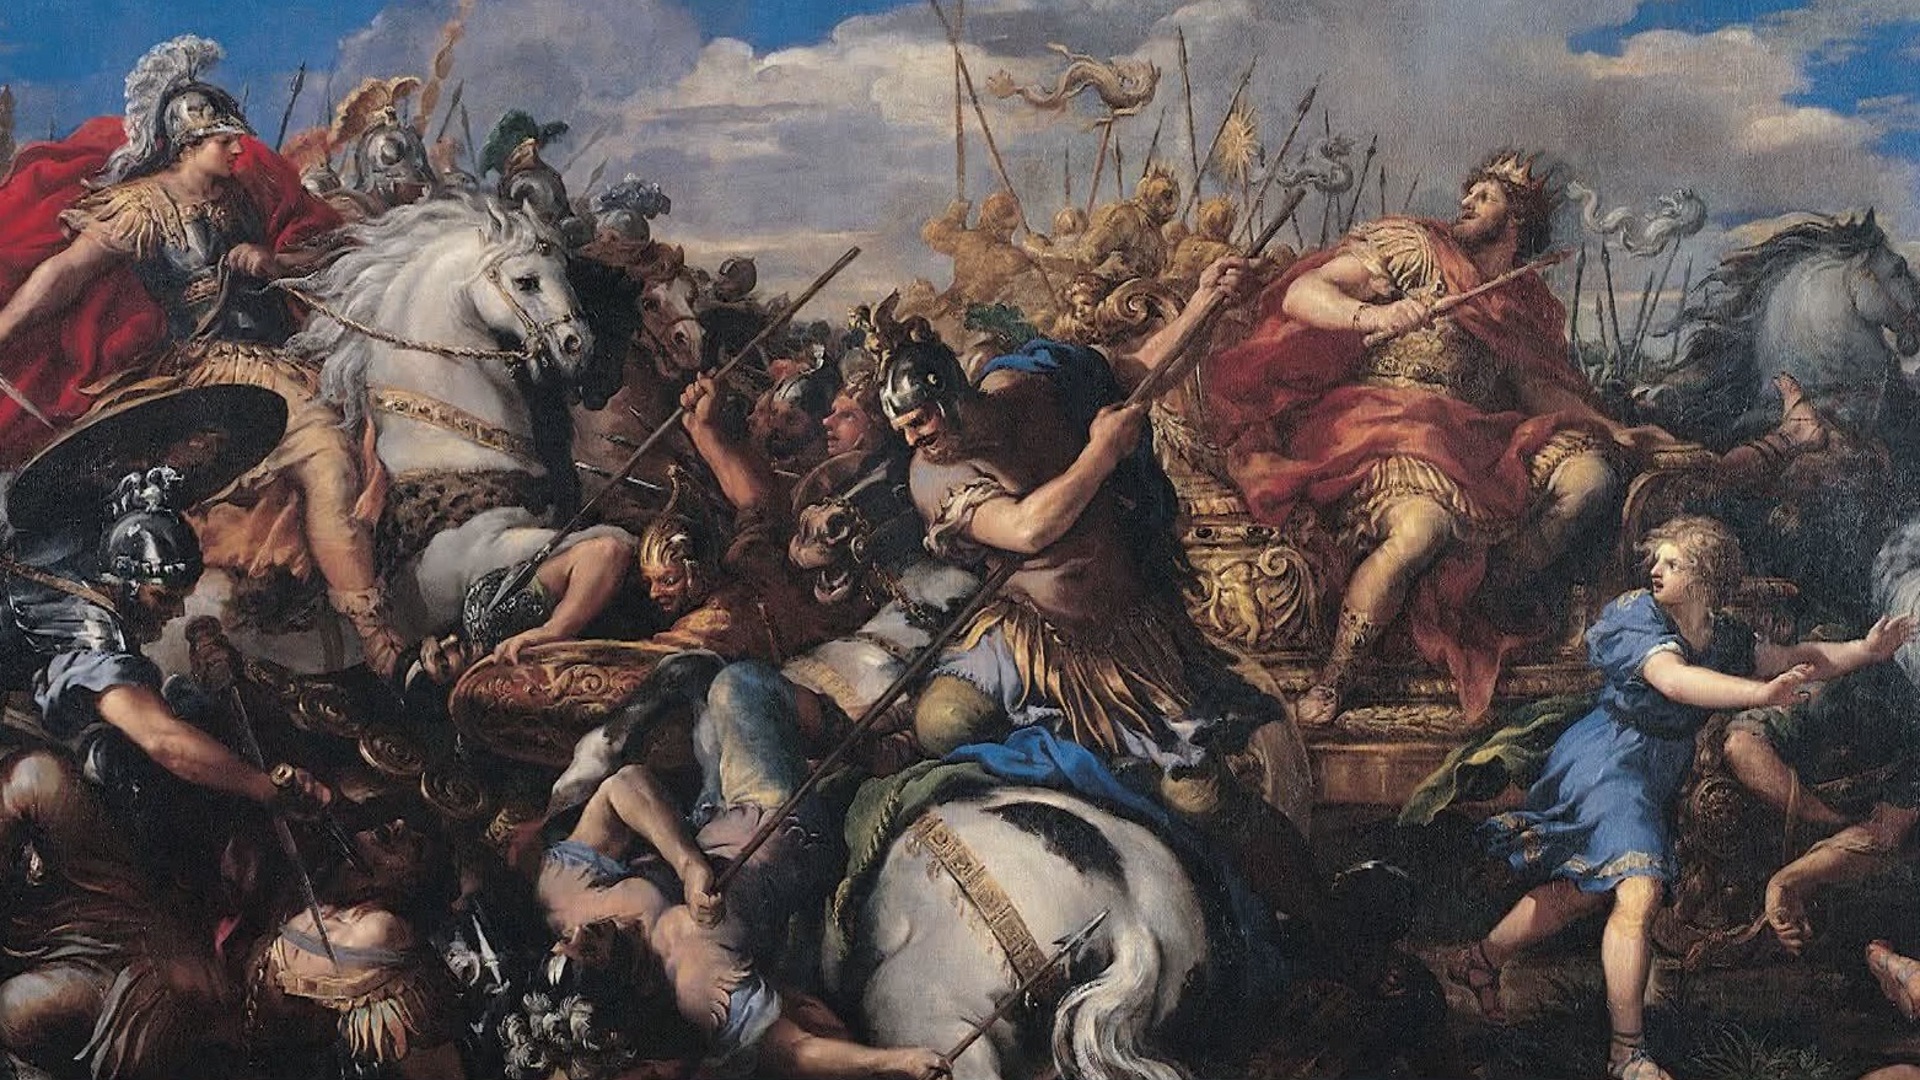 Битва при гавгамелах древняя греция